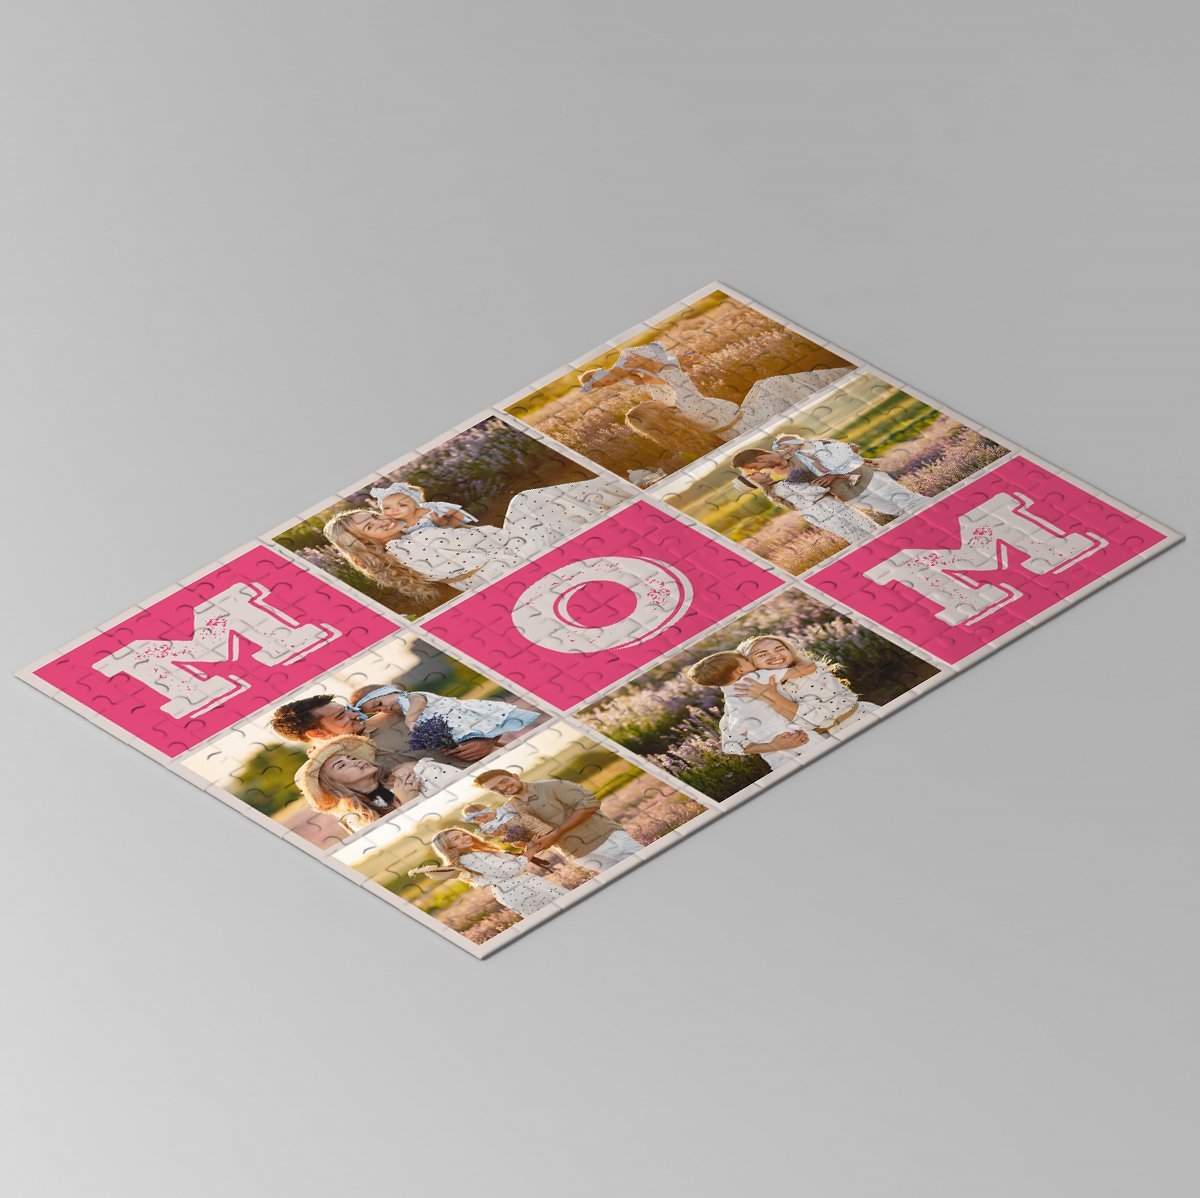 Mom, Custom Photo Jigsaw Puzzles